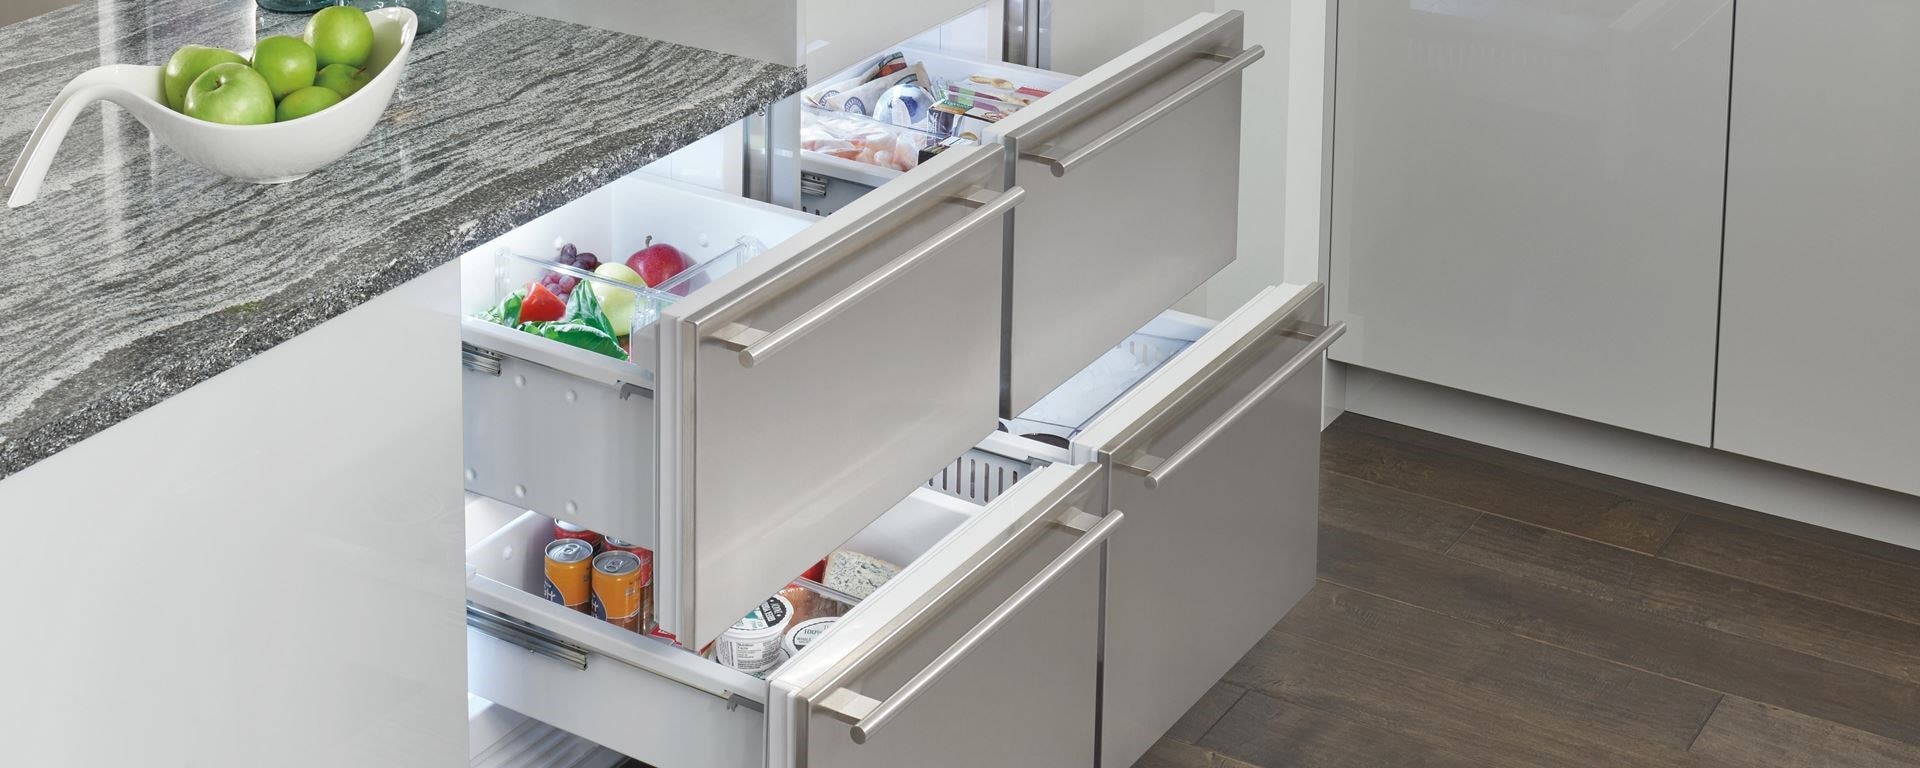 Sub-Zero refrigerator drawers and freezer drawers with custom panels